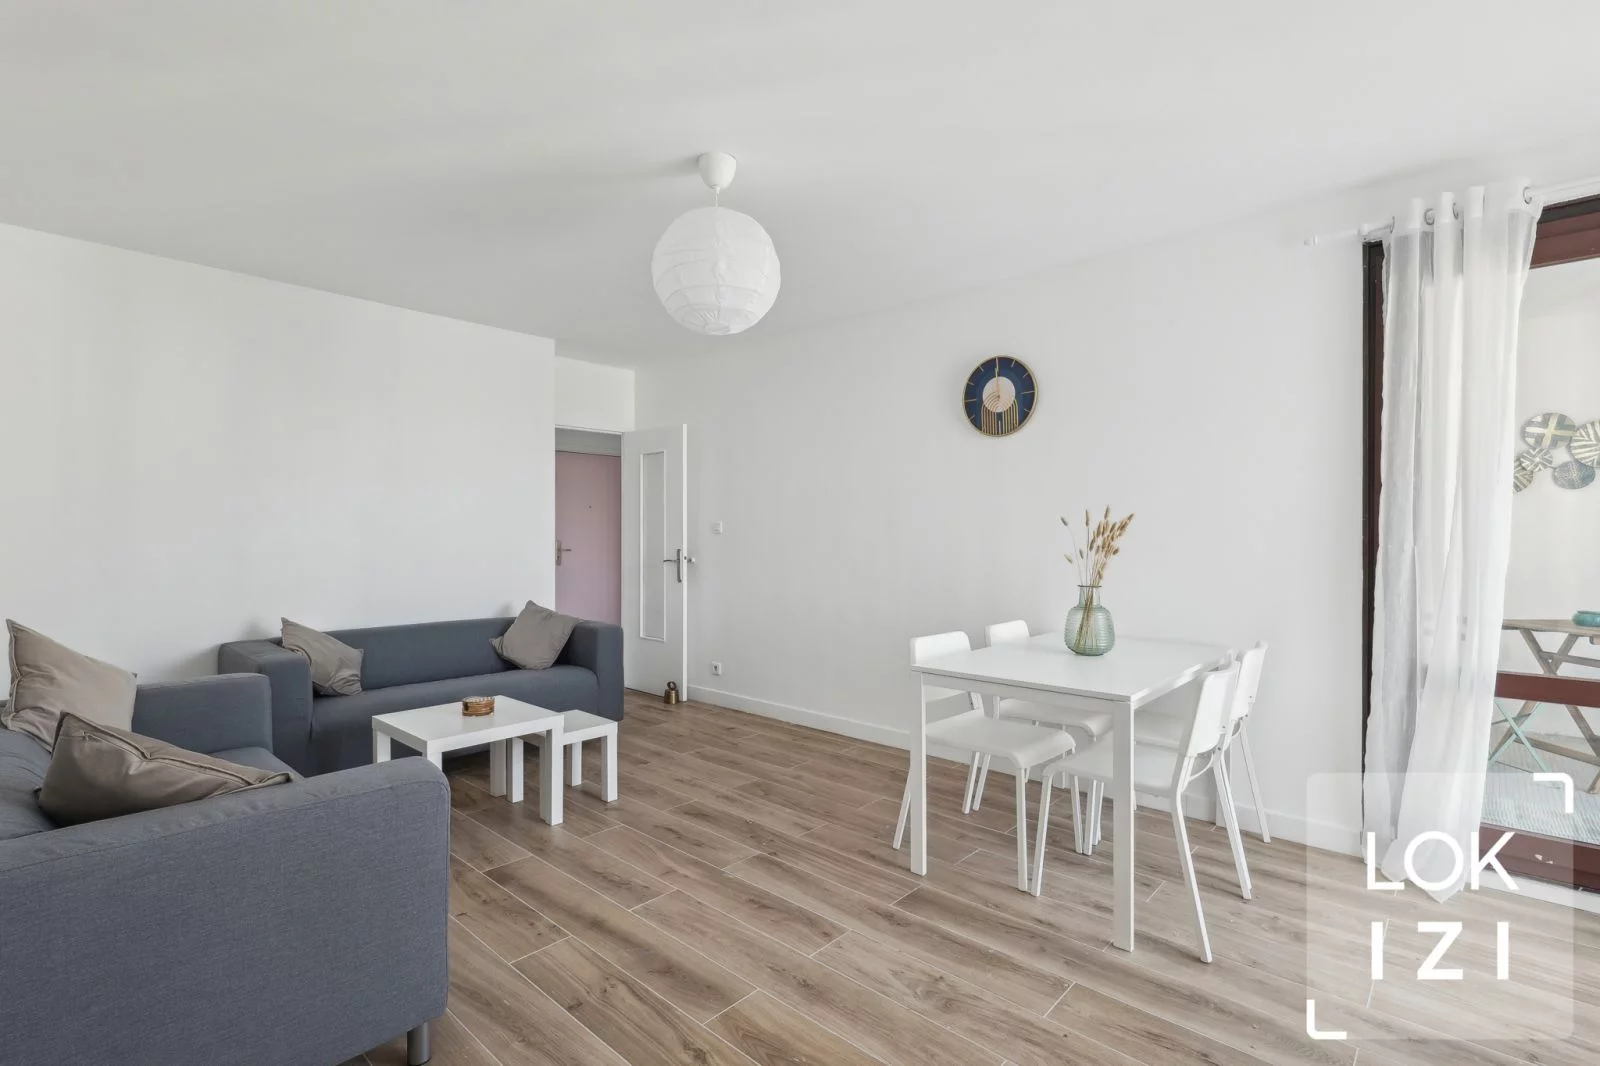 Location appartement meubl 4 pices 73m (Toulouse sud)